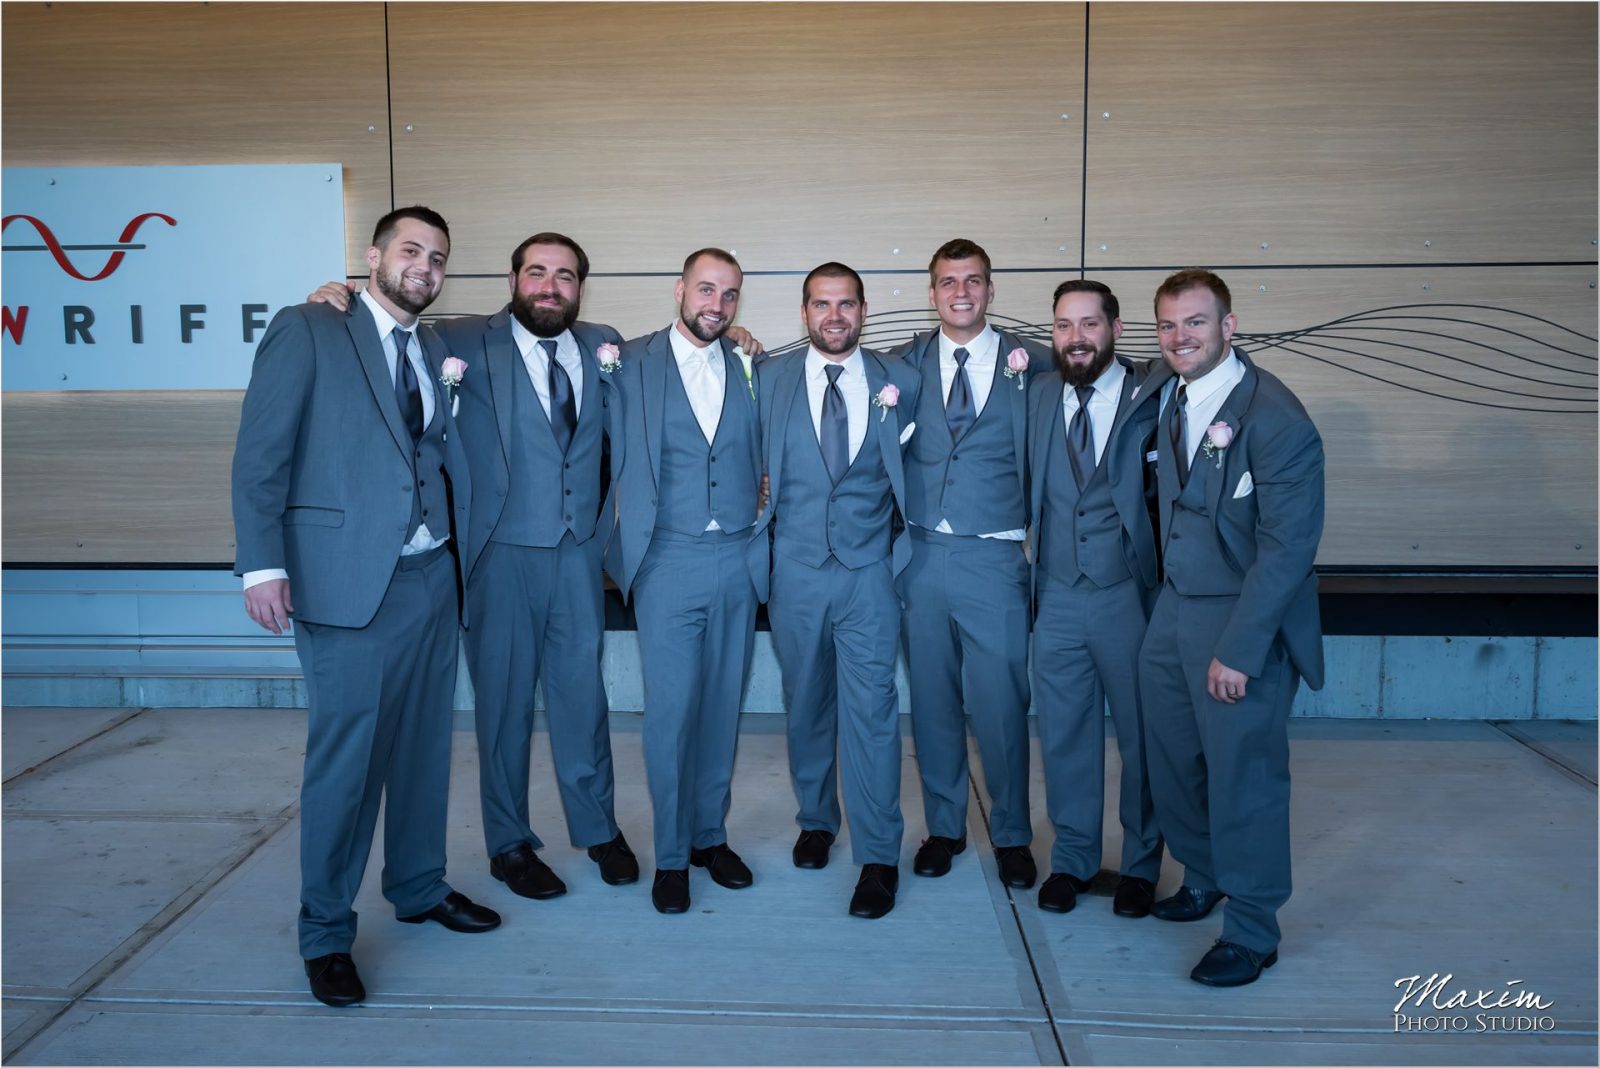 New Riff Wedding groomsmen